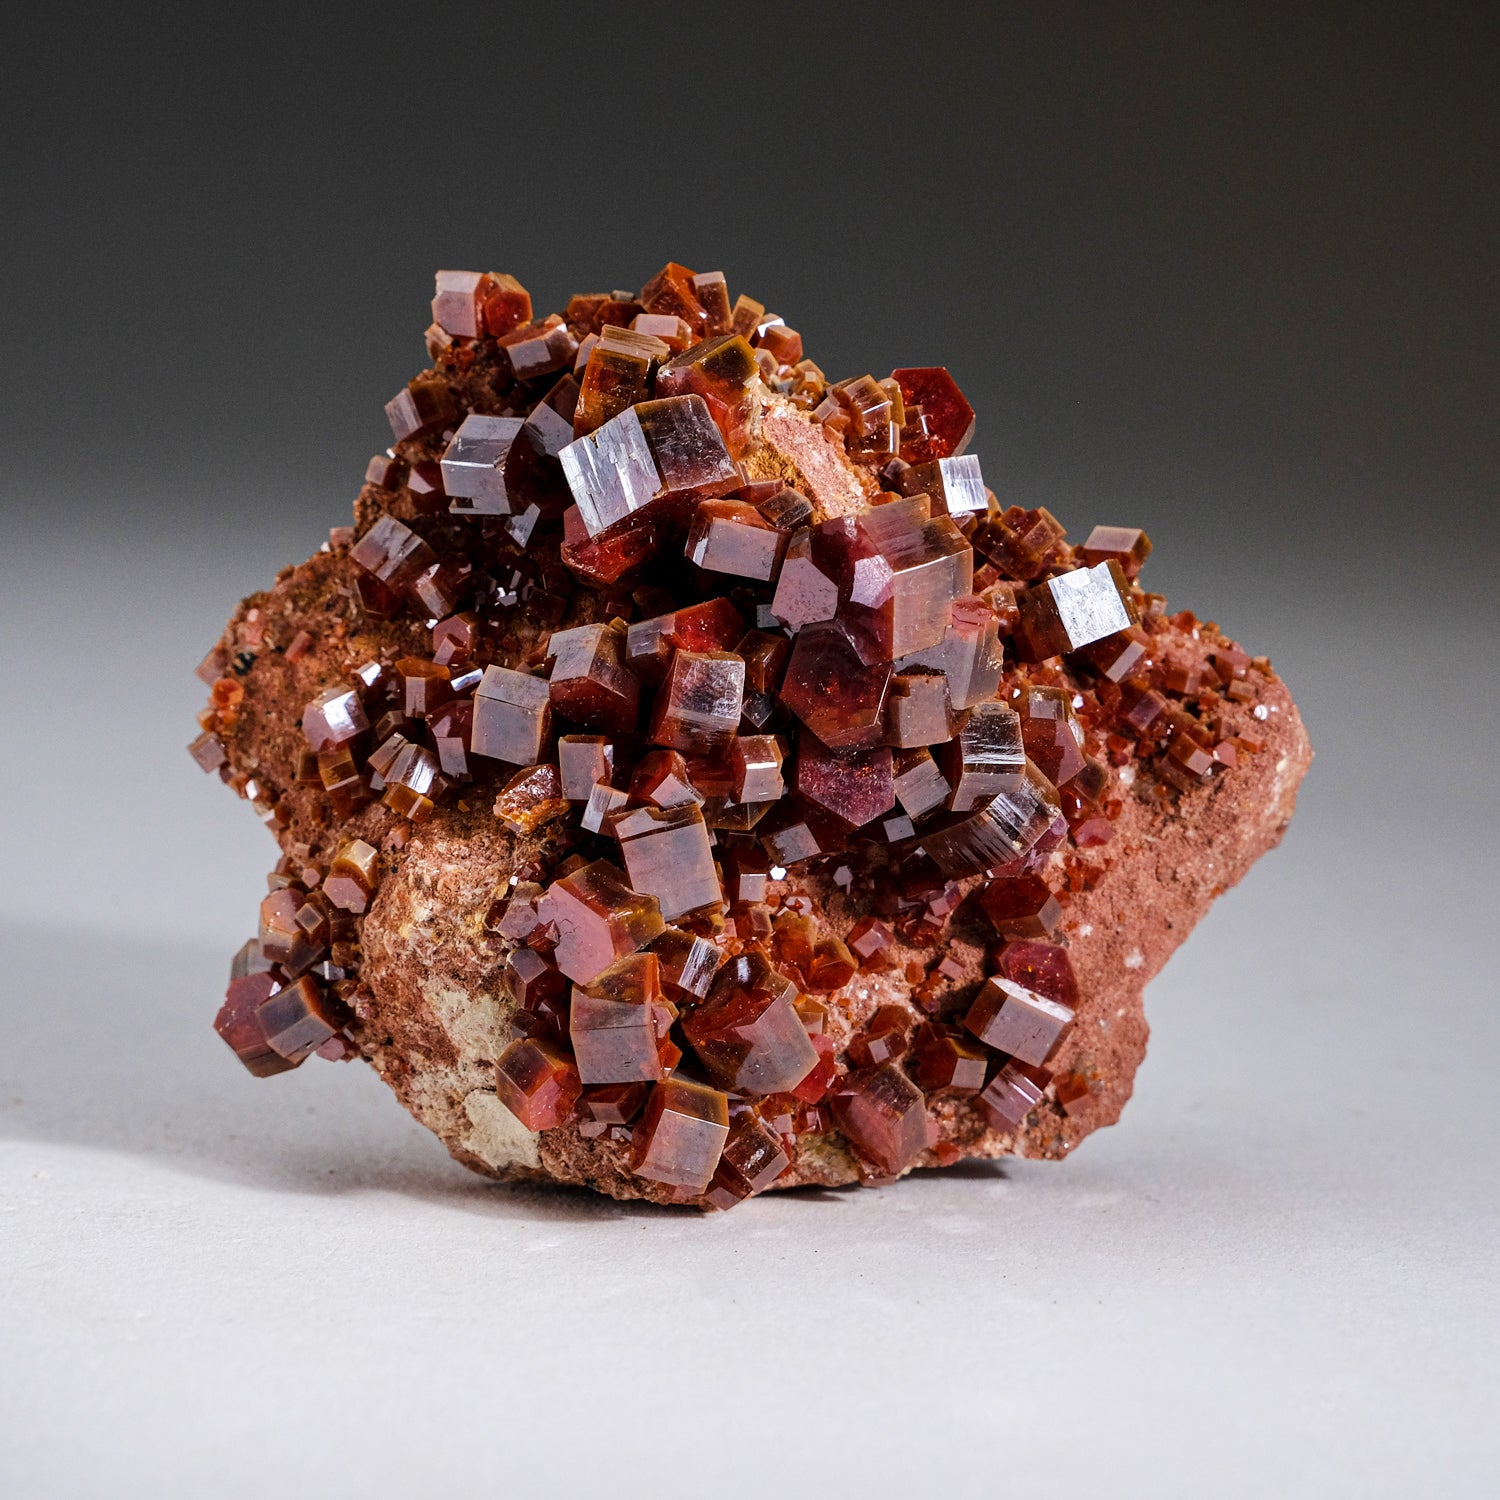 Genuine Vanadinite Crystal Cluster on Matrix from Morocco (183.4 grams)